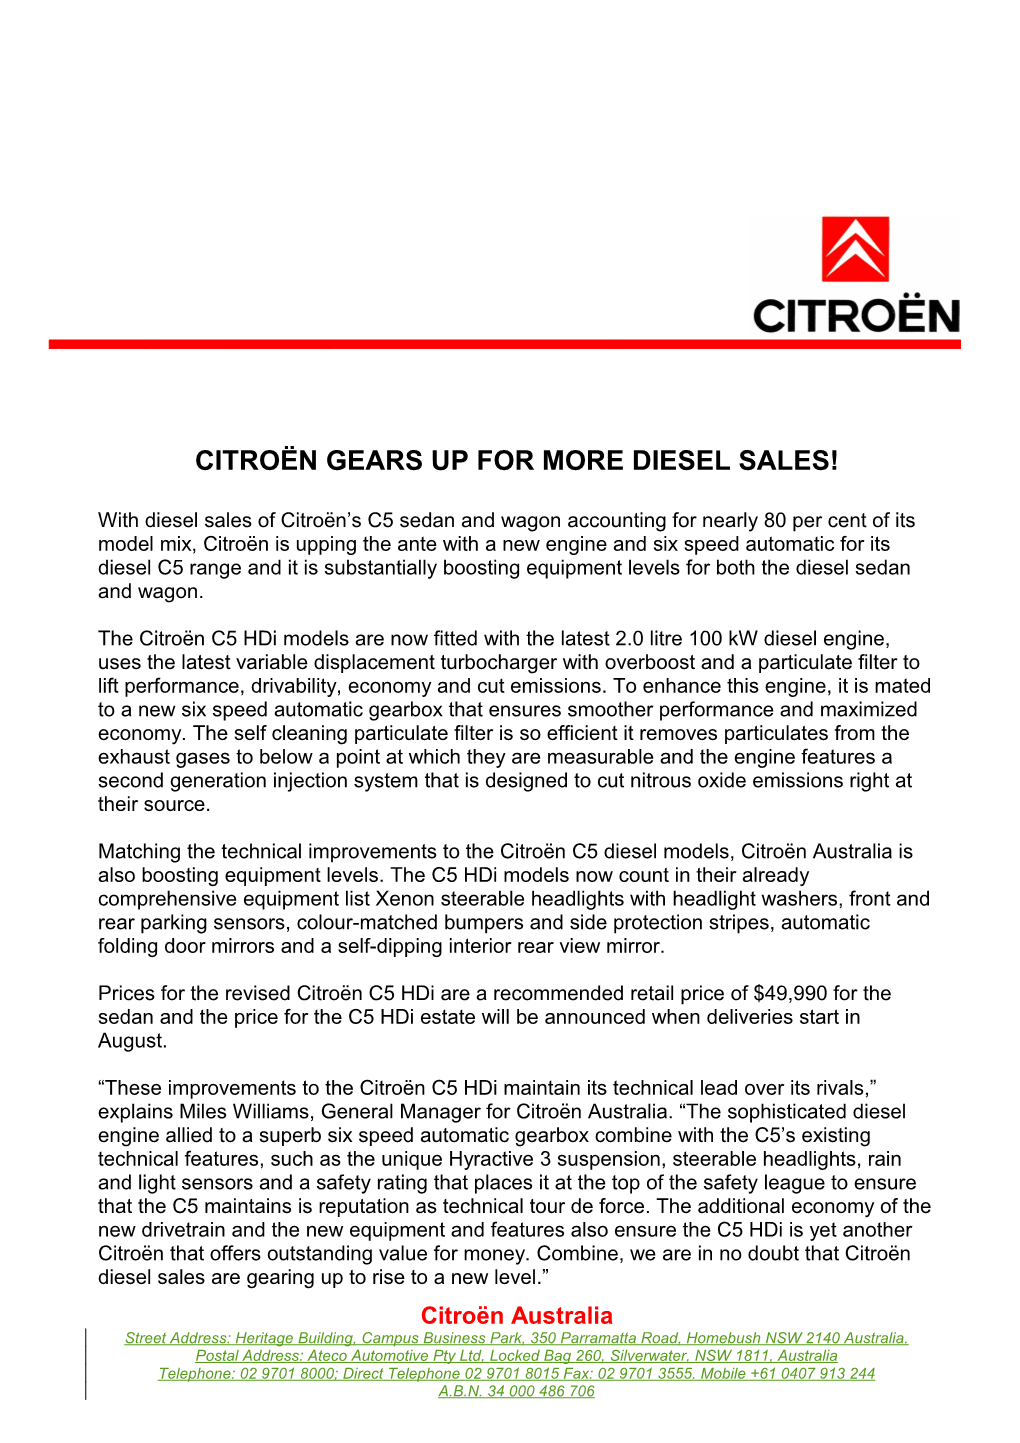 Citroën Gears up for More Diesel Sales!